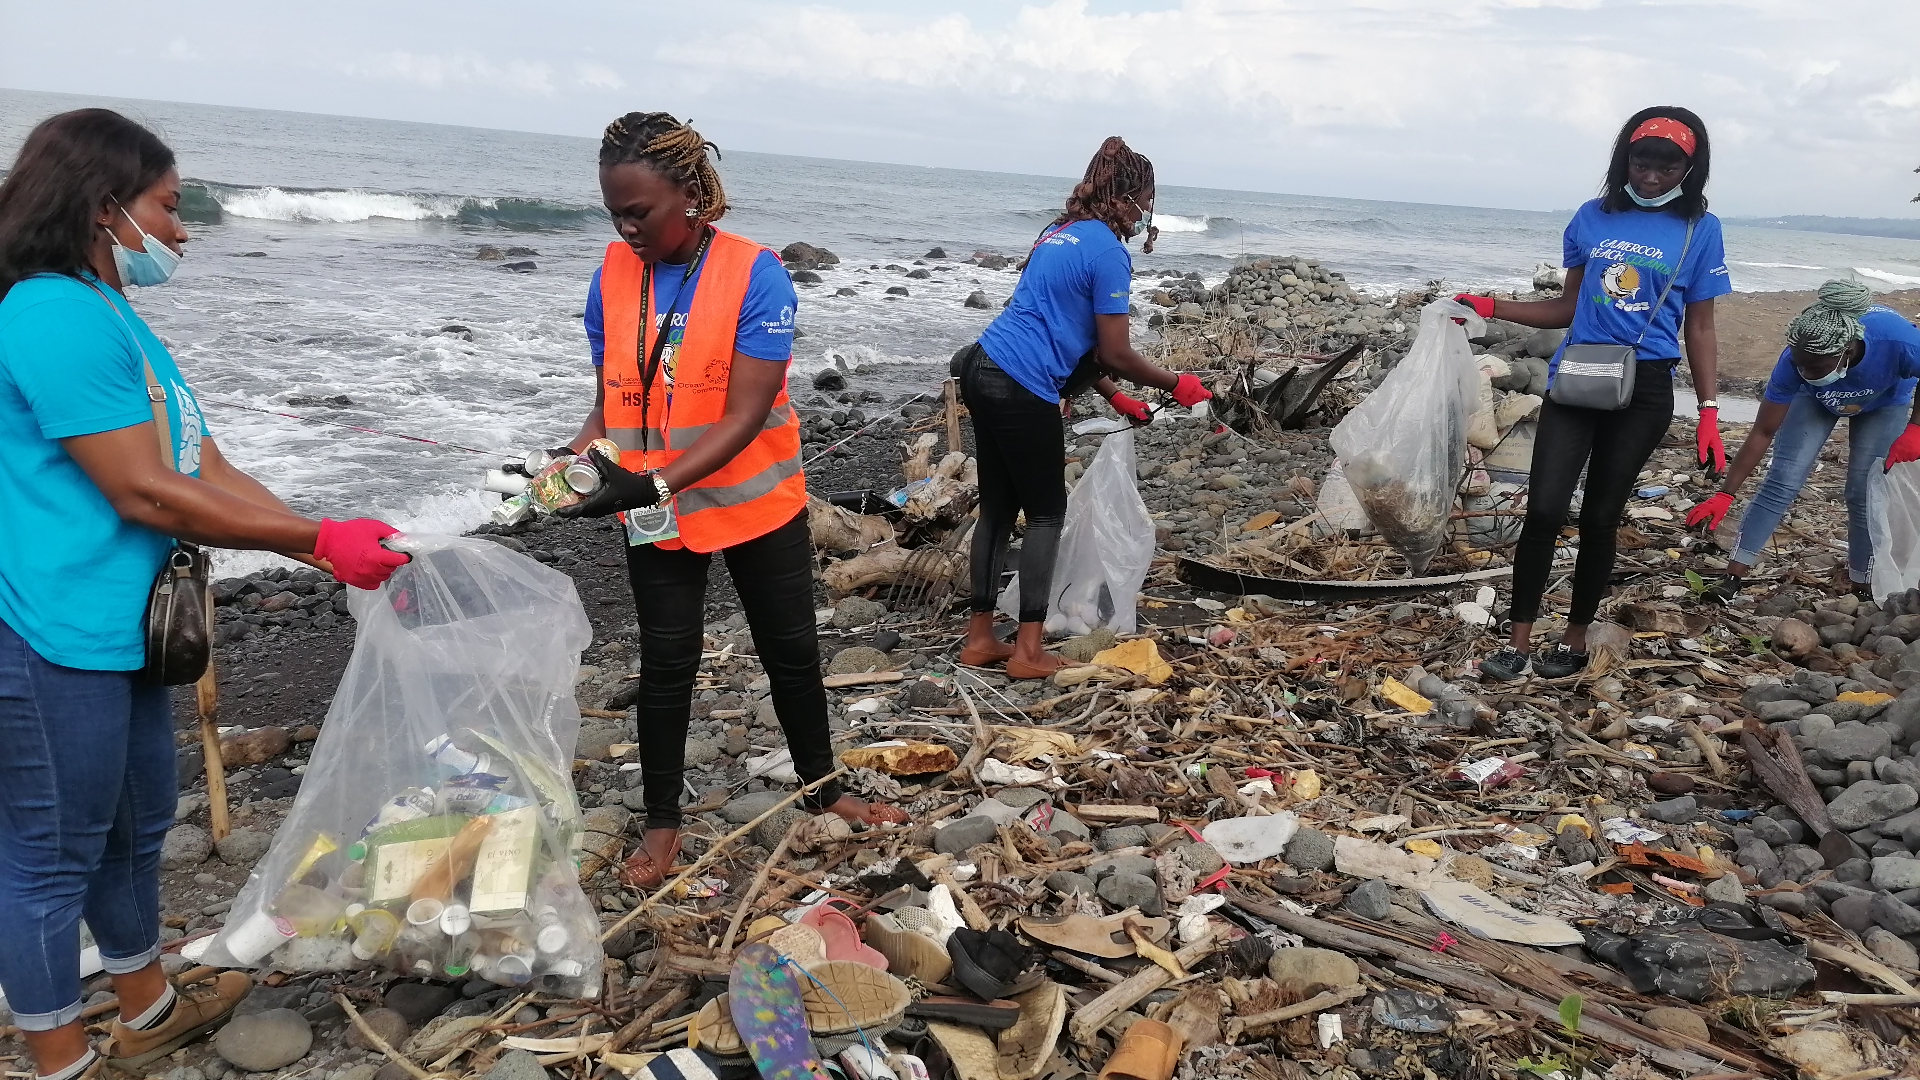 Youth volunteers battle to rescue Cameroon coastlines, spearhead marine debris cleanup efforts